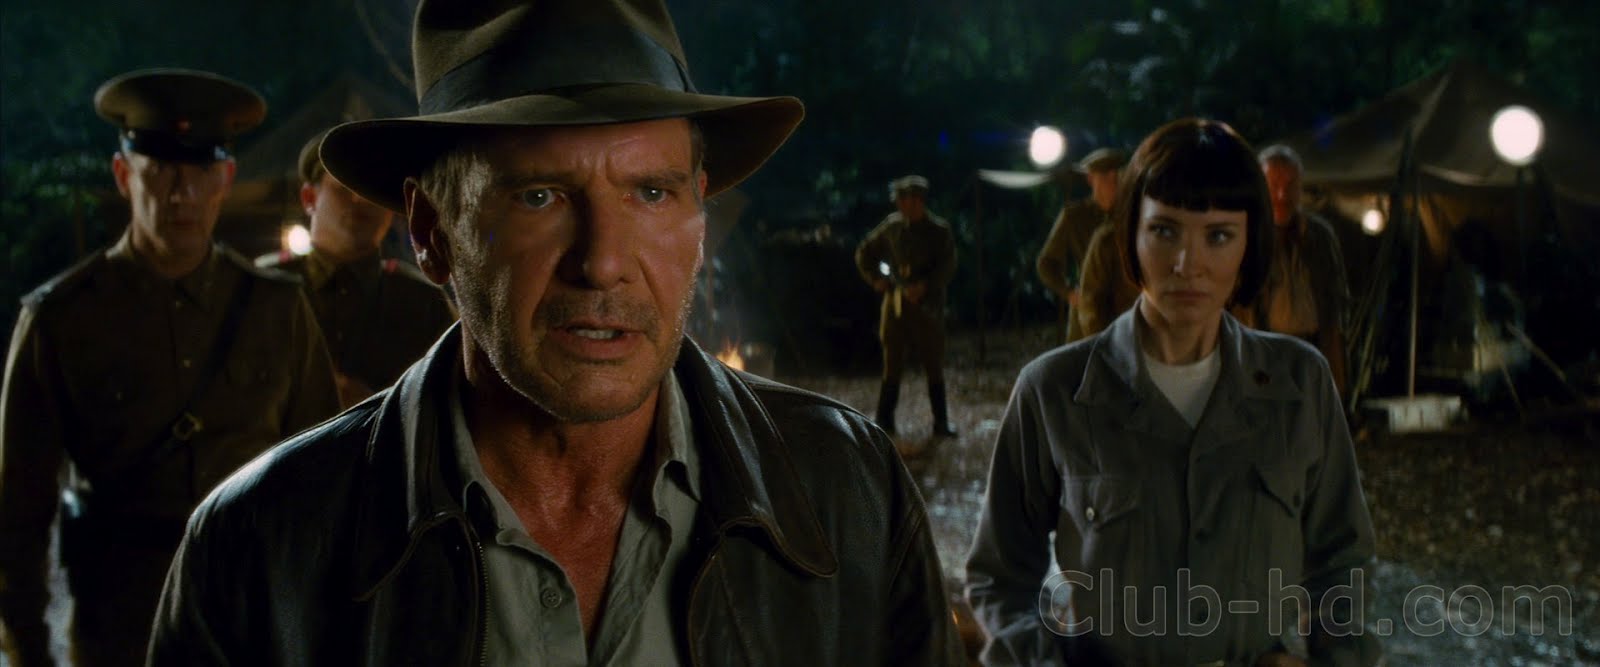 Indiana Jones and the Kingdom of the Crystal Skull (2008) 1080p BDRip Dual Latino-Ingles [Subt. Esp-Ing] (Aventura. Acción)